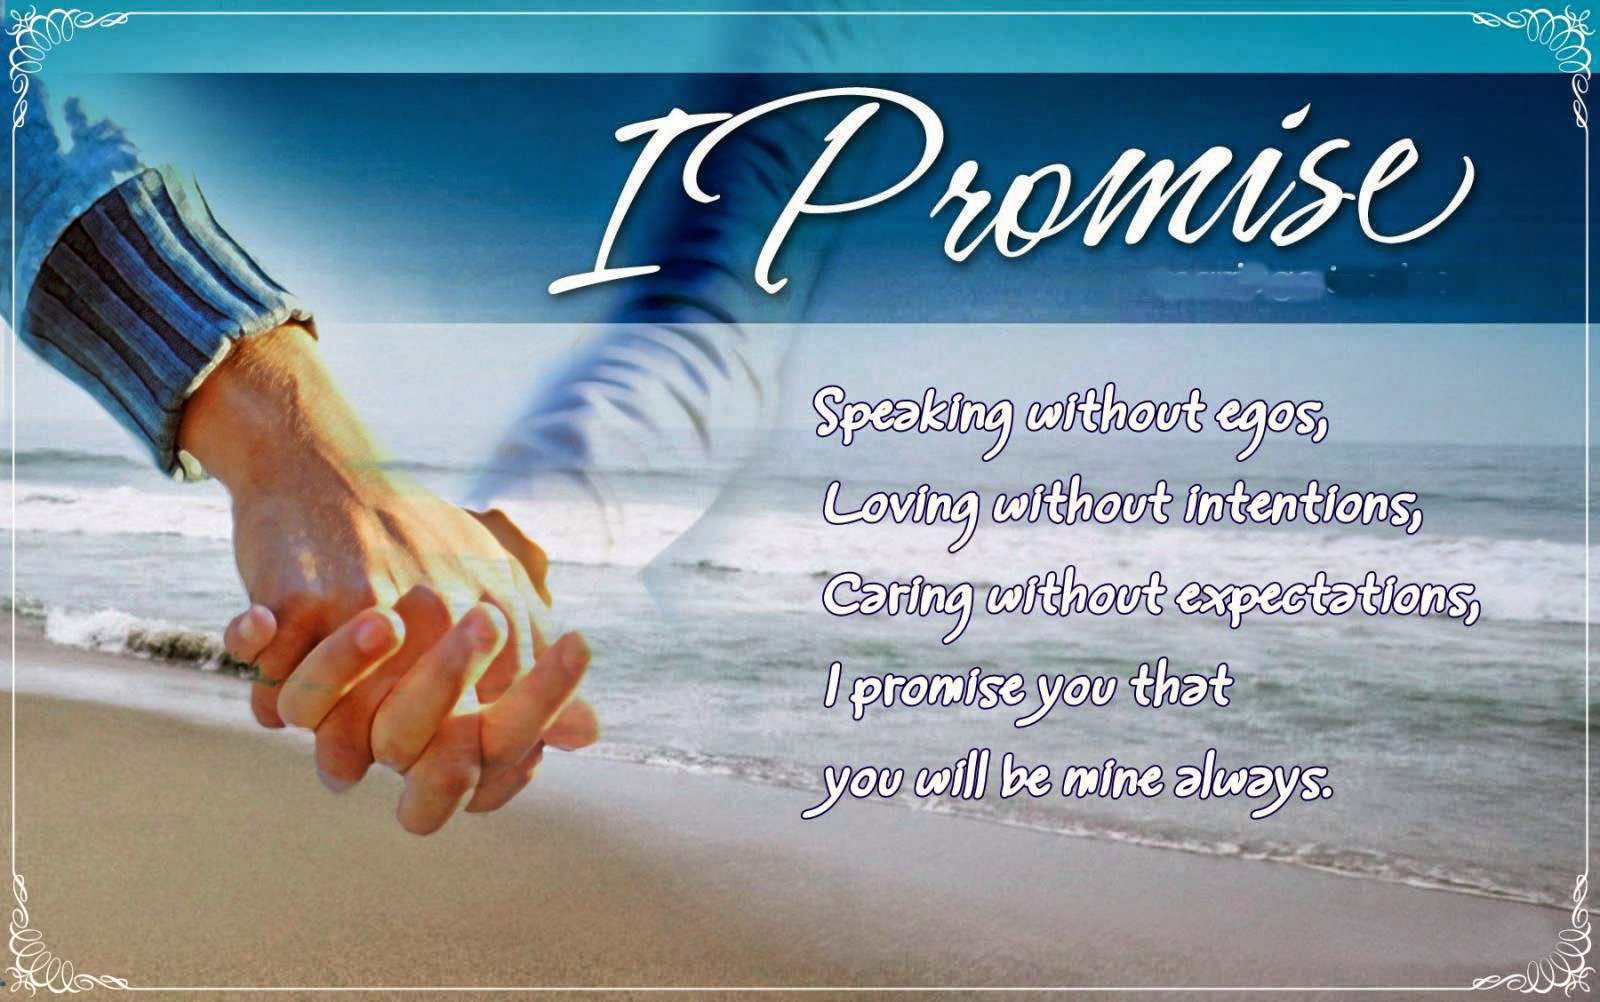 promise day shayari